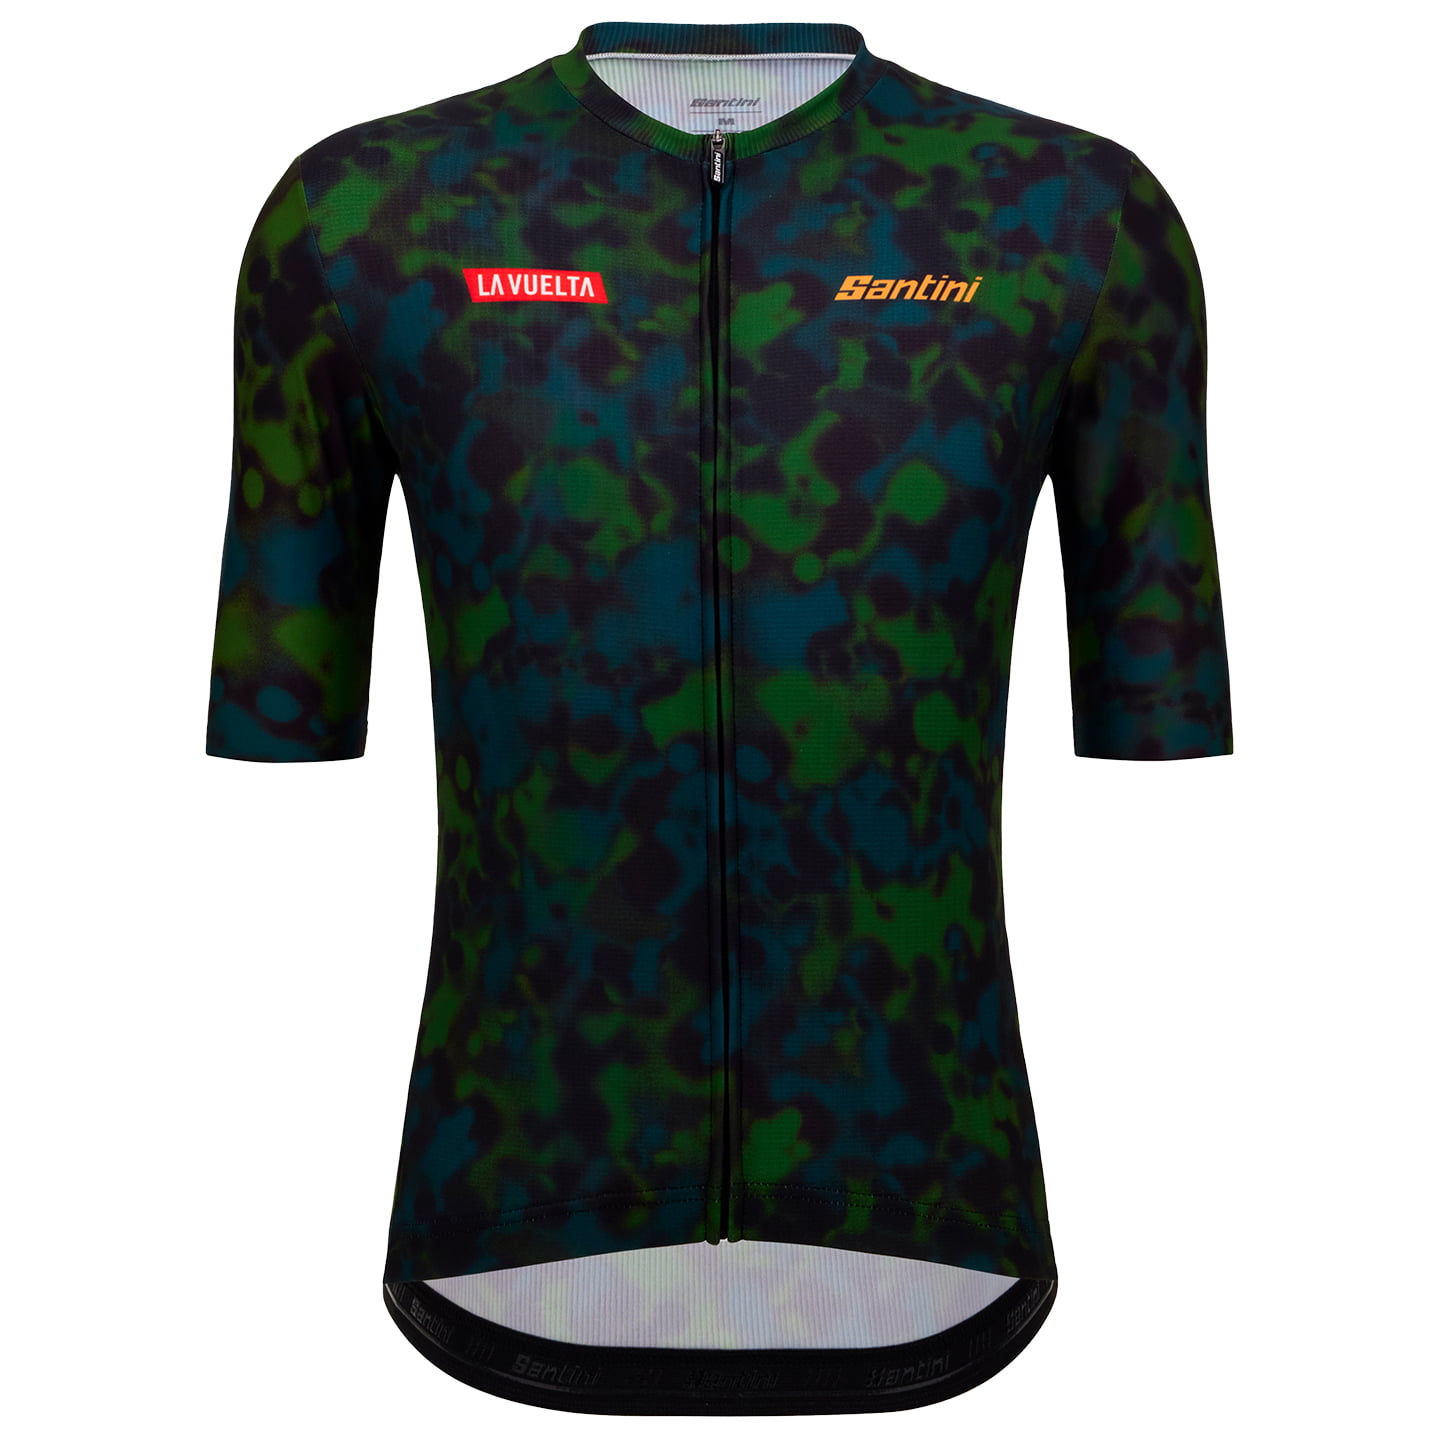 LA VUELTA Angliru 2023 Short Sleeve Jersey, for men, size M, Cycle jersey, Cycling clothing